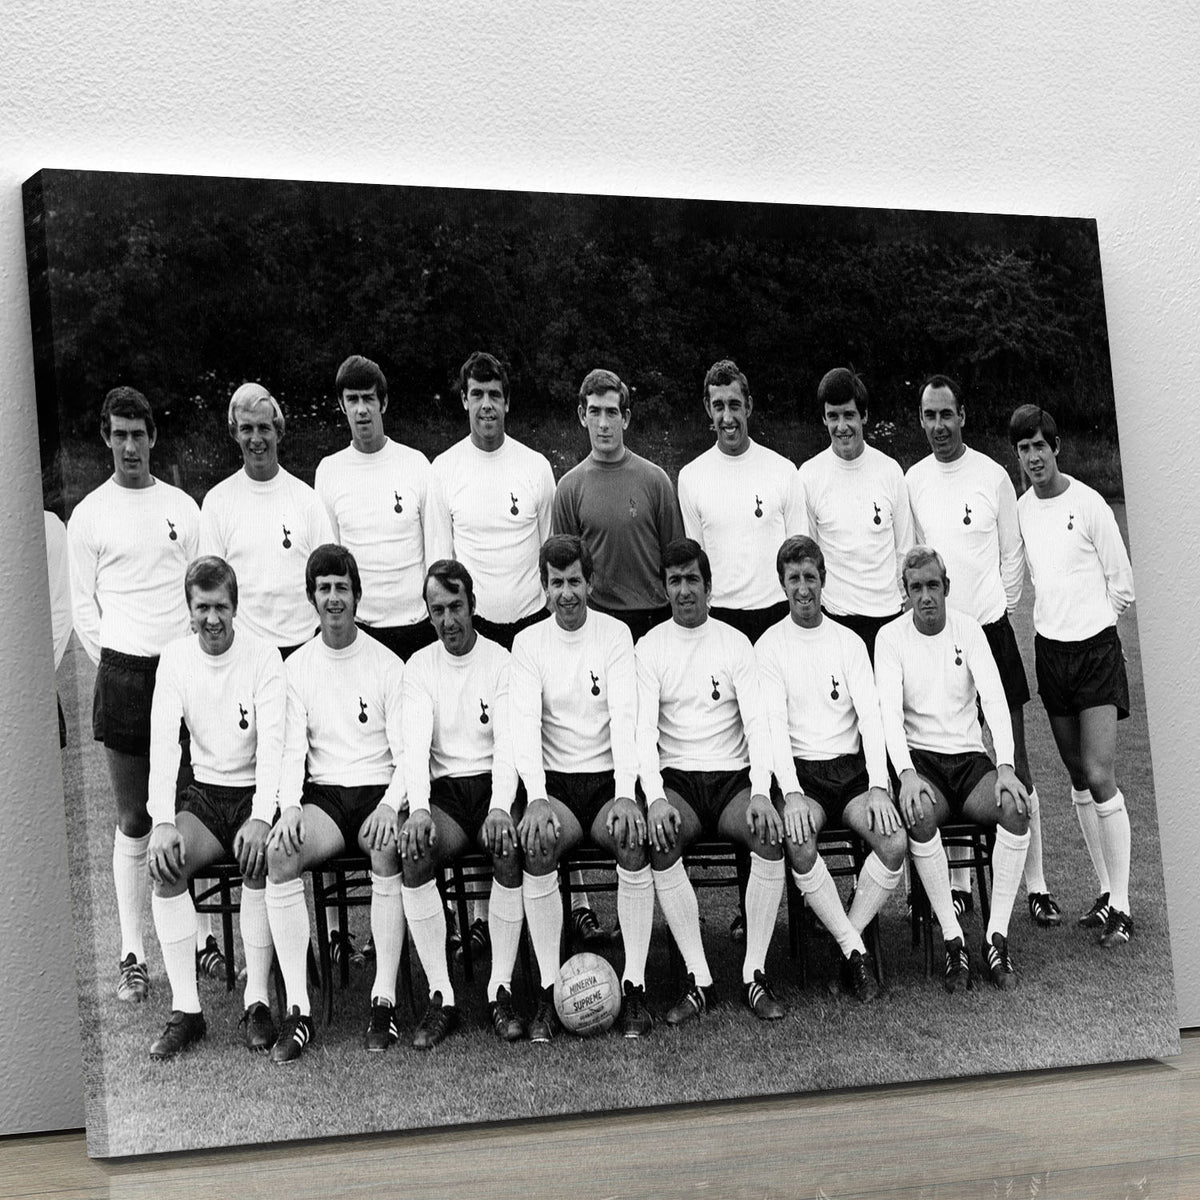 Tottenham Hotspur FC Team Players Poster 